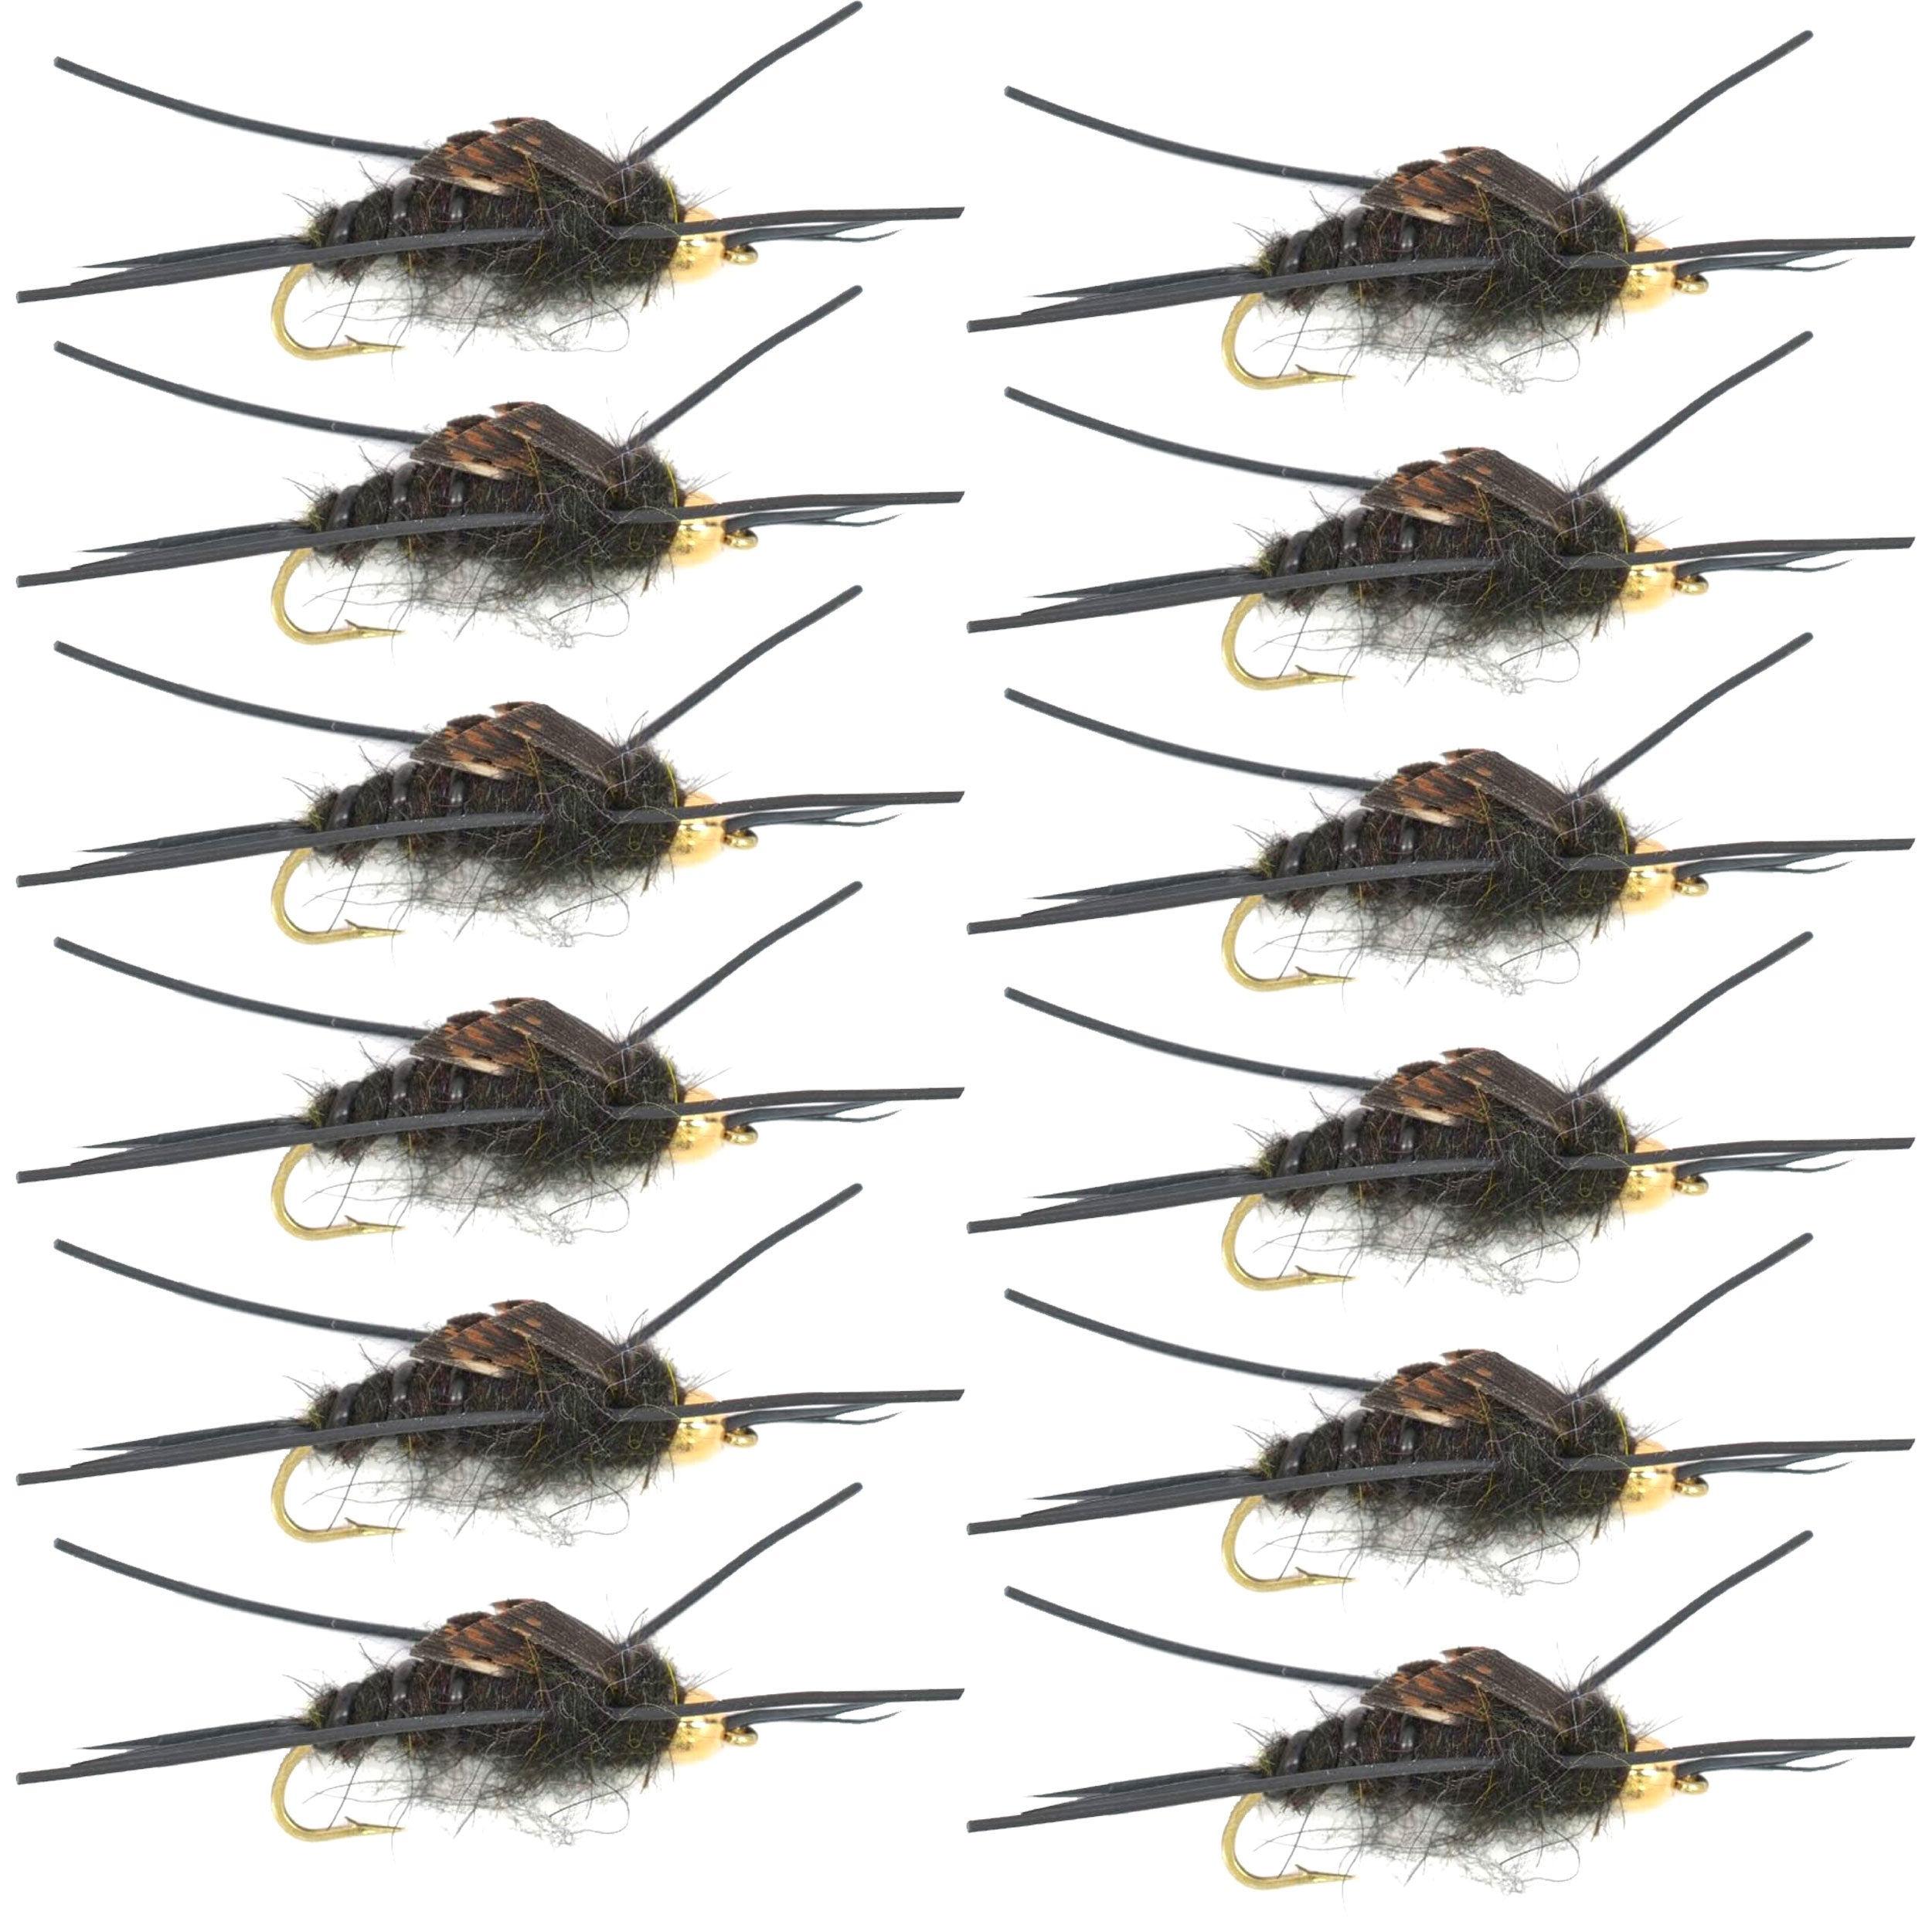 Tungsten Bead Kaufmann's Black Stone Fly with Rubber Legs - Stonefly Wet Fly - 1 Dozen Flies Hook Size 12